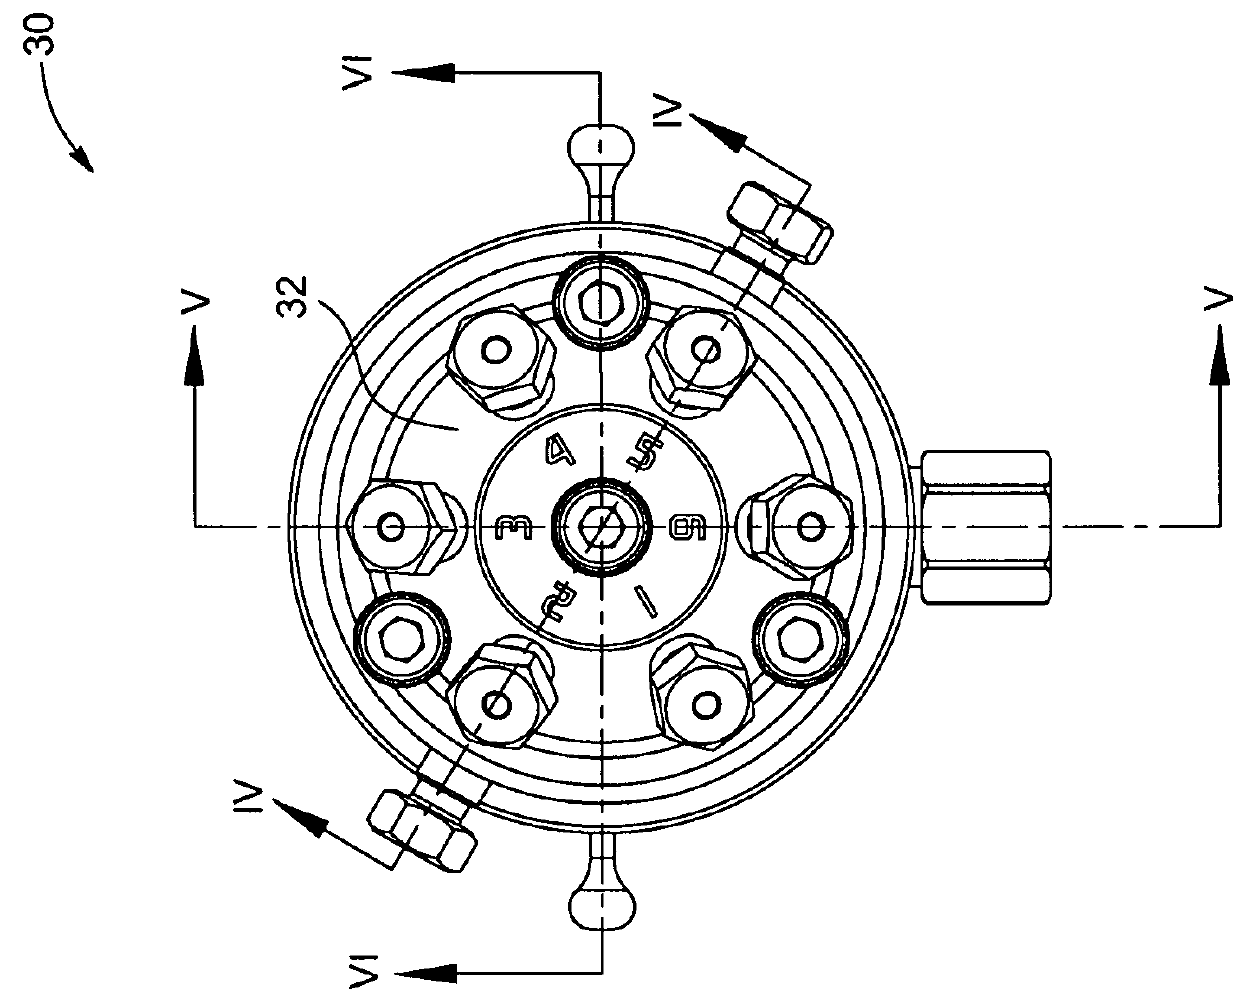 Diaphragm-sealed valve with improved actuator design